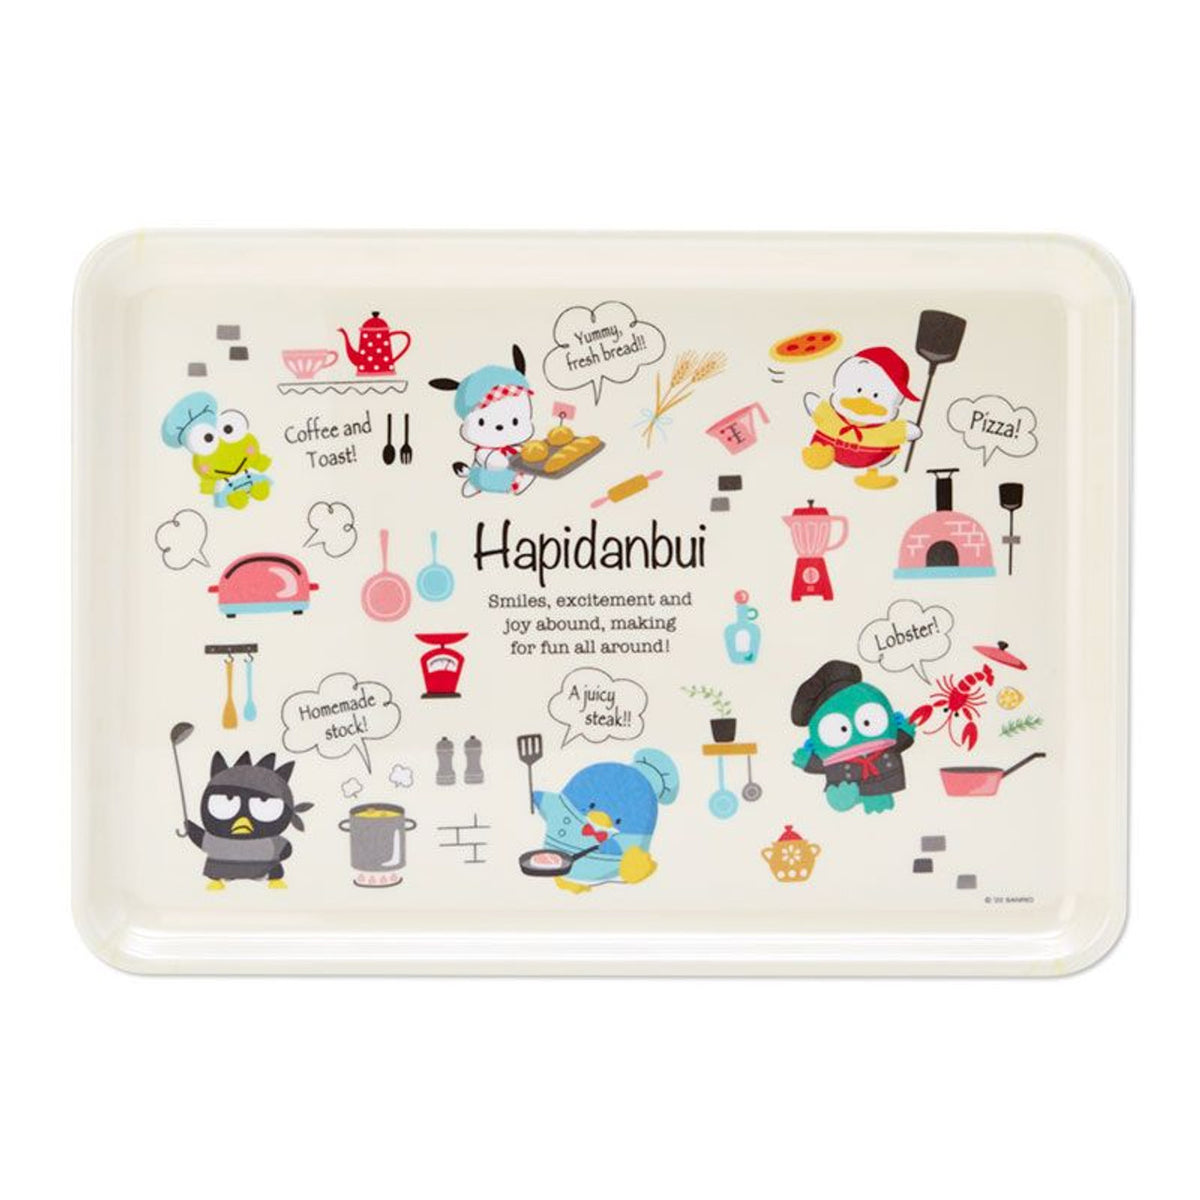 Hapidanbui Gourmet Tray (Cooking Series) Home Goods Japan Original   